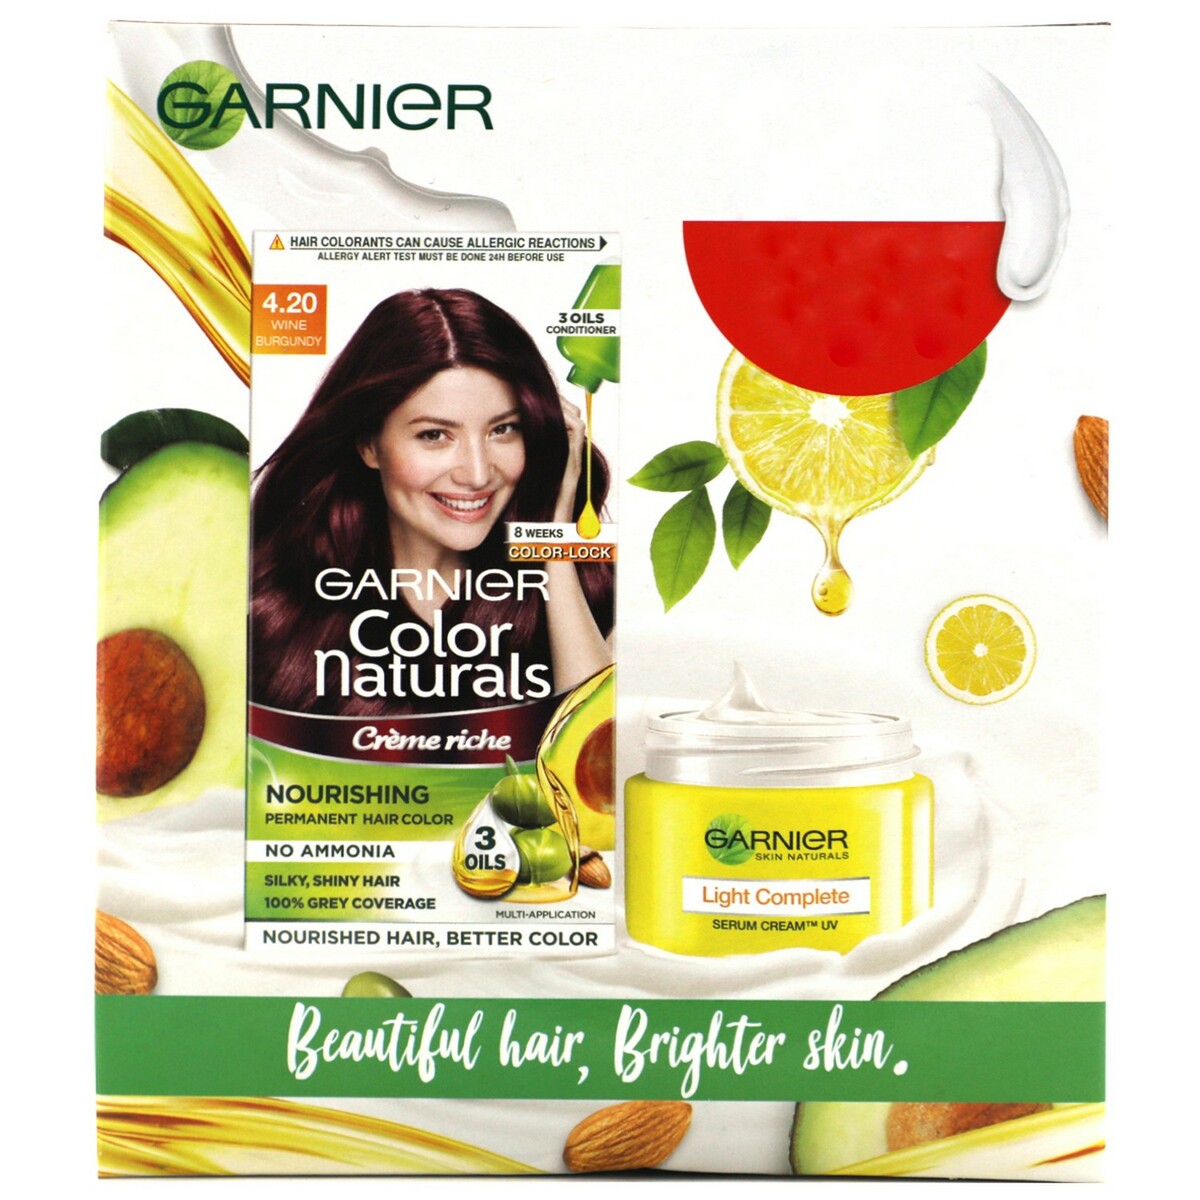 Garnier Hair Color Color Naturals Wine Burgundy 4.20 1's